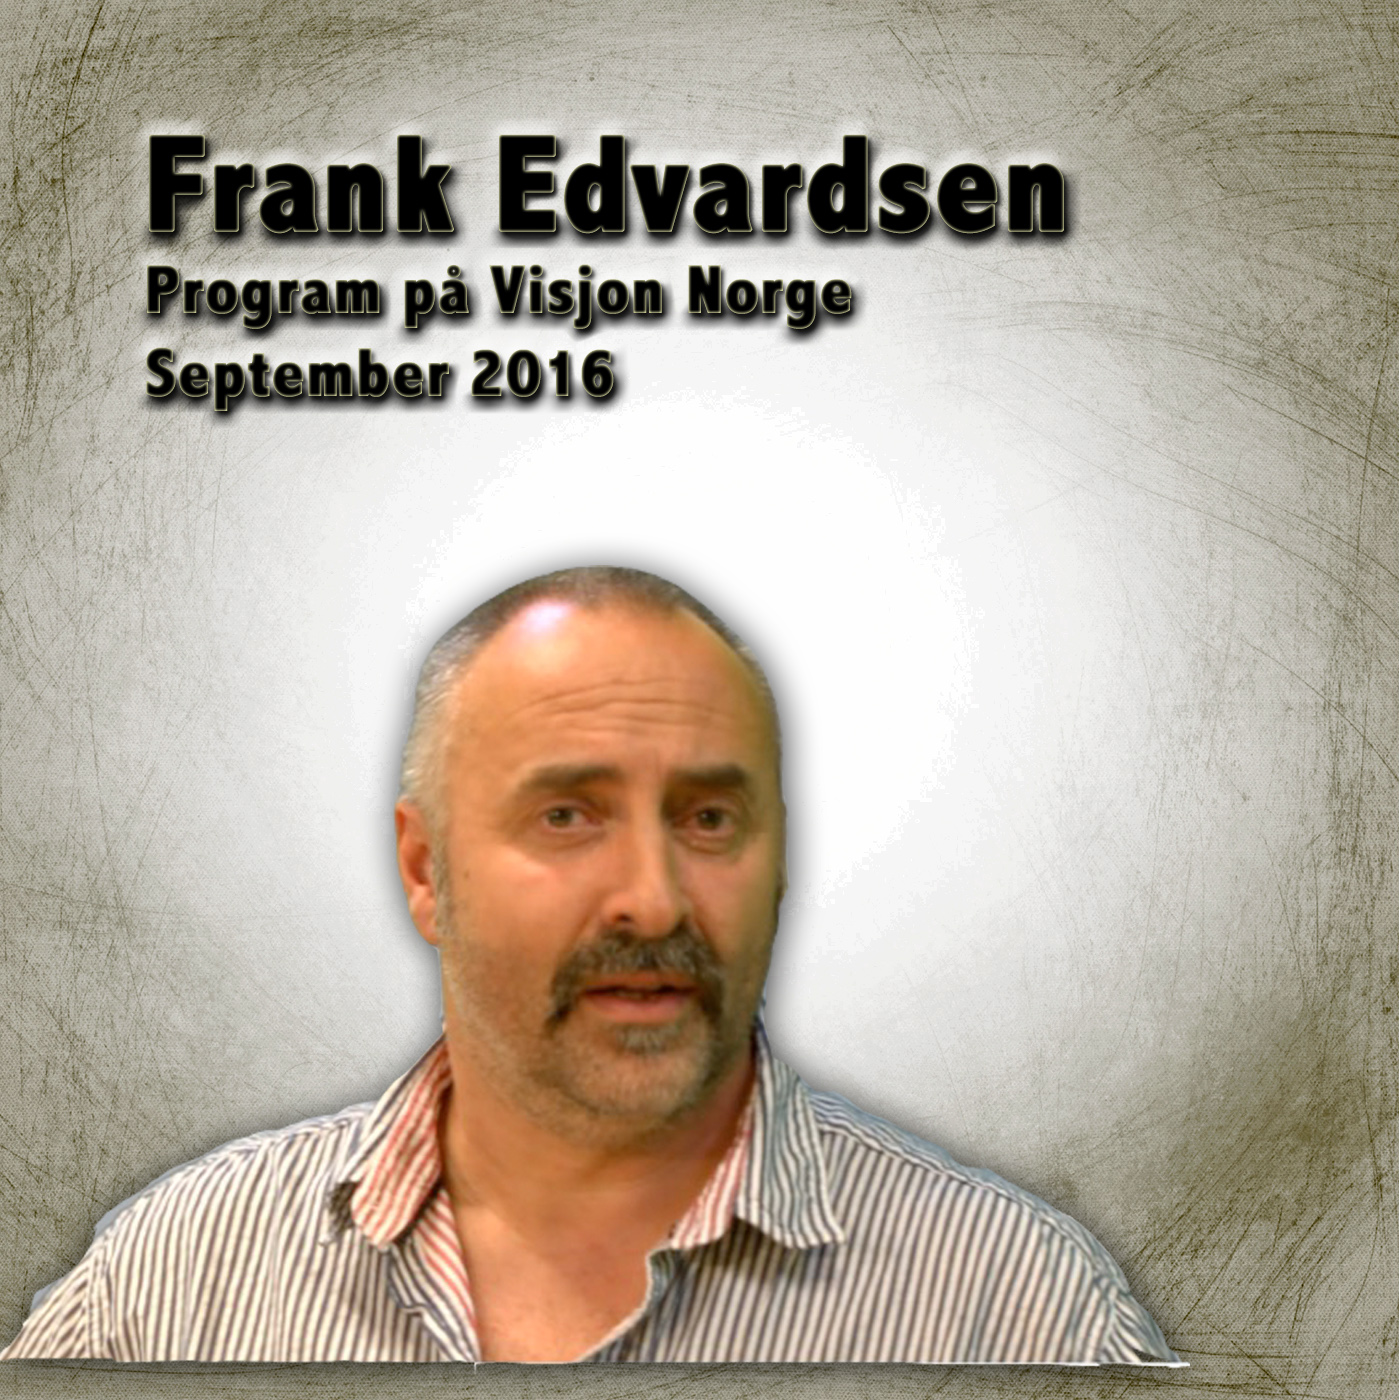 Frank Edvardsen